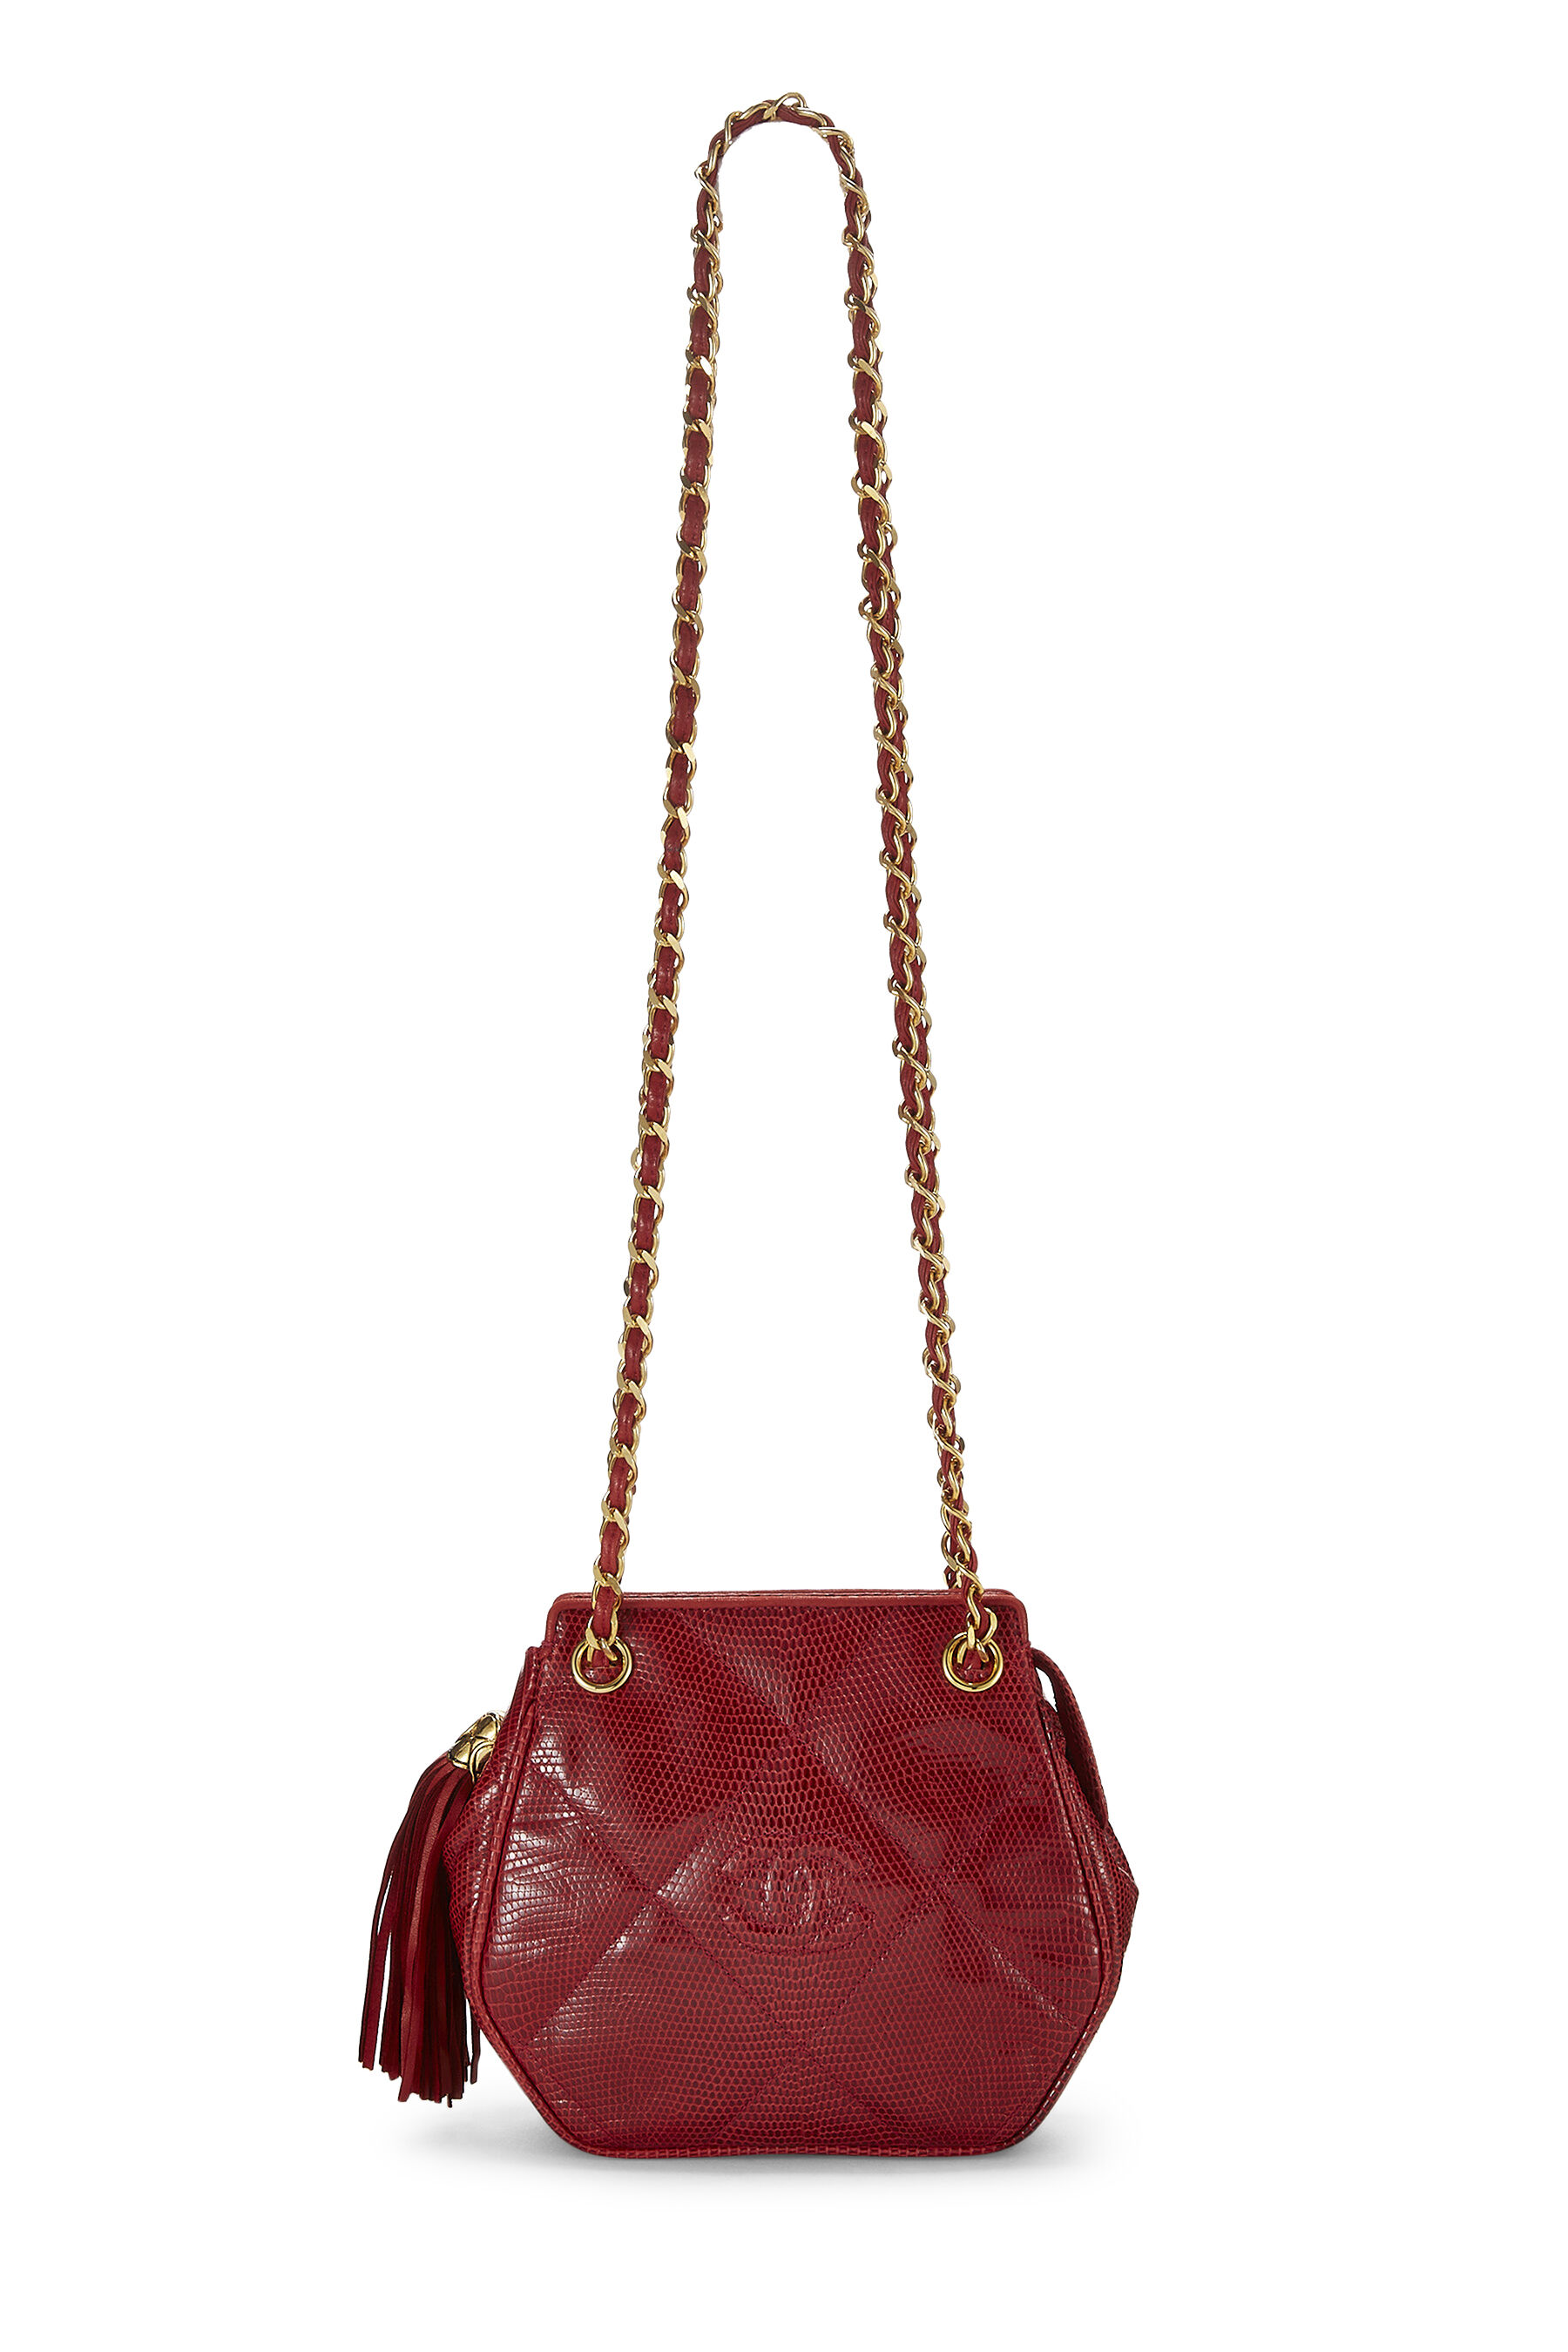 Chanel red hobo bag - Gem